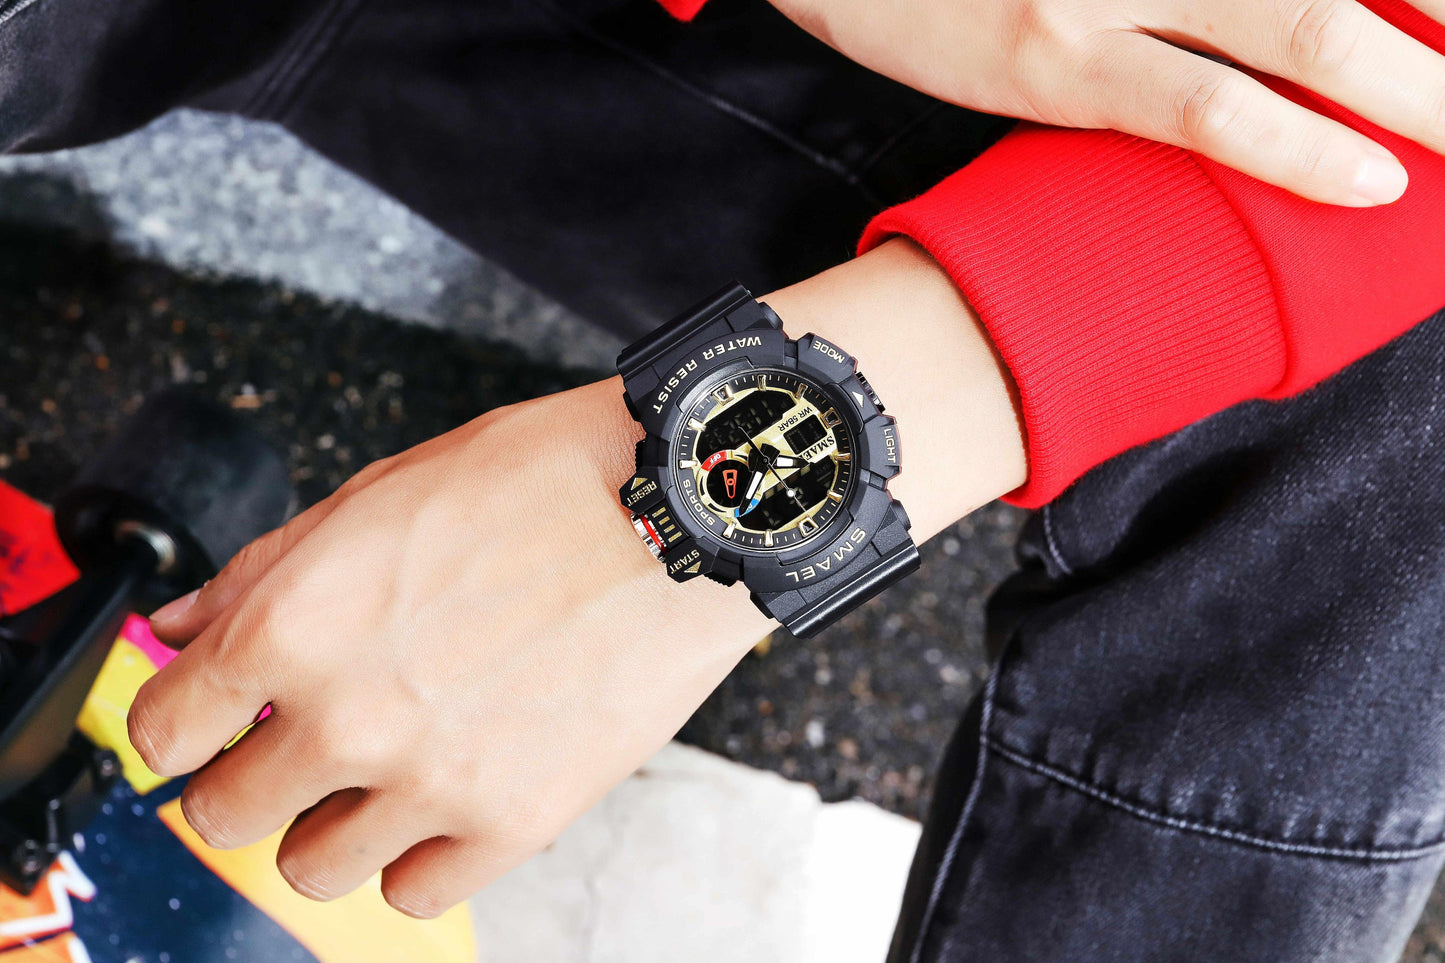 Military Watch For Men 50M Waterproof Clocks Luminous - Hands Digital Wristwatches Black Gold (MA9)(RW)(1U84)